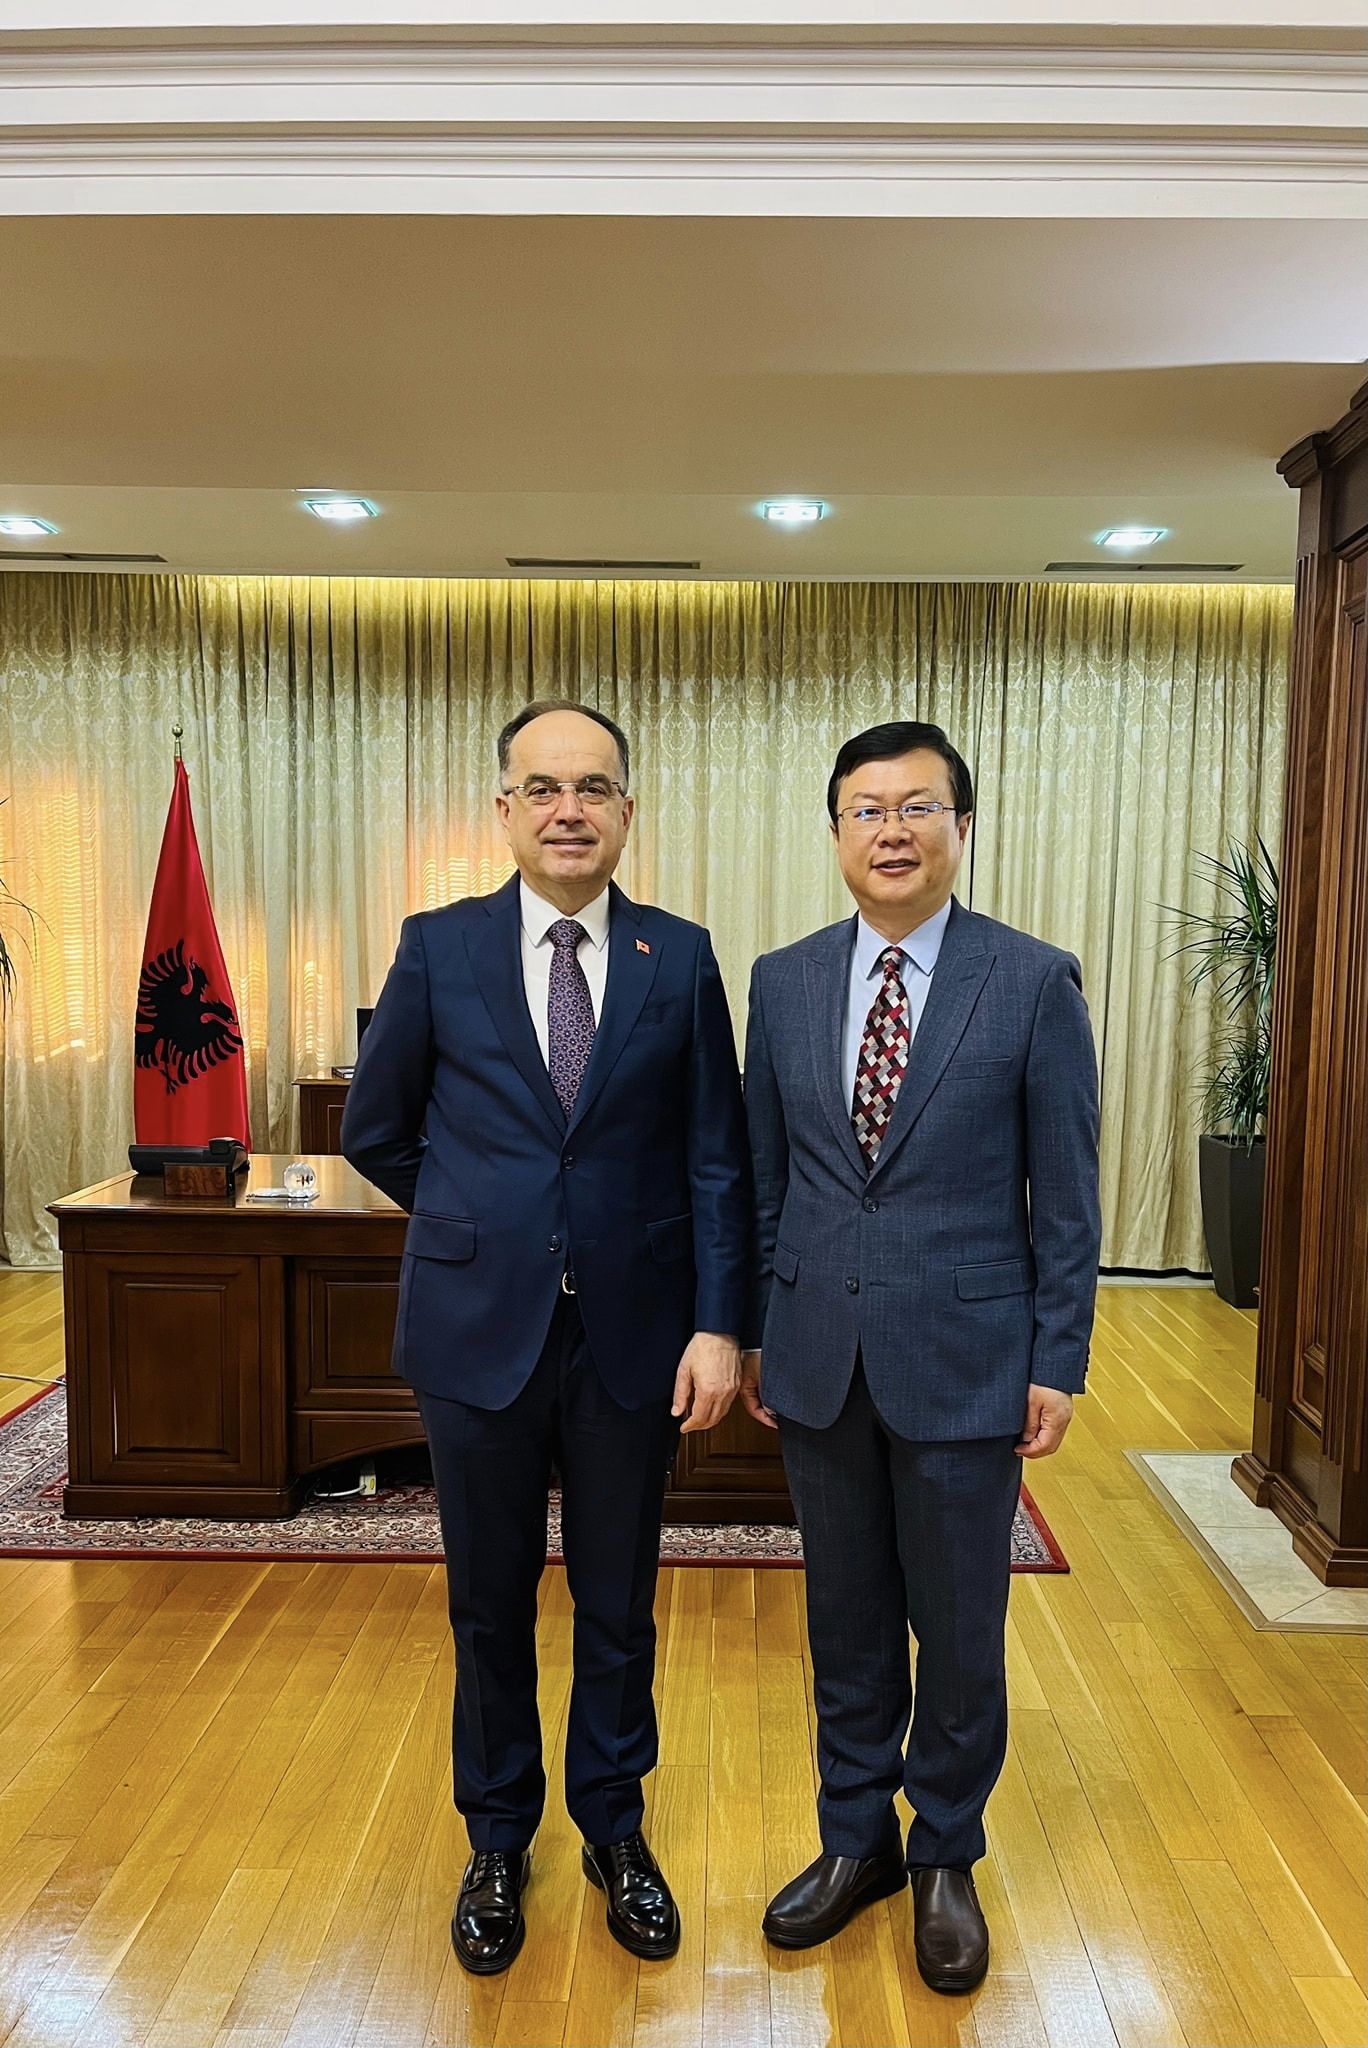 Ambasadori i Kines me presidentin Begaj (Foto Facebook)